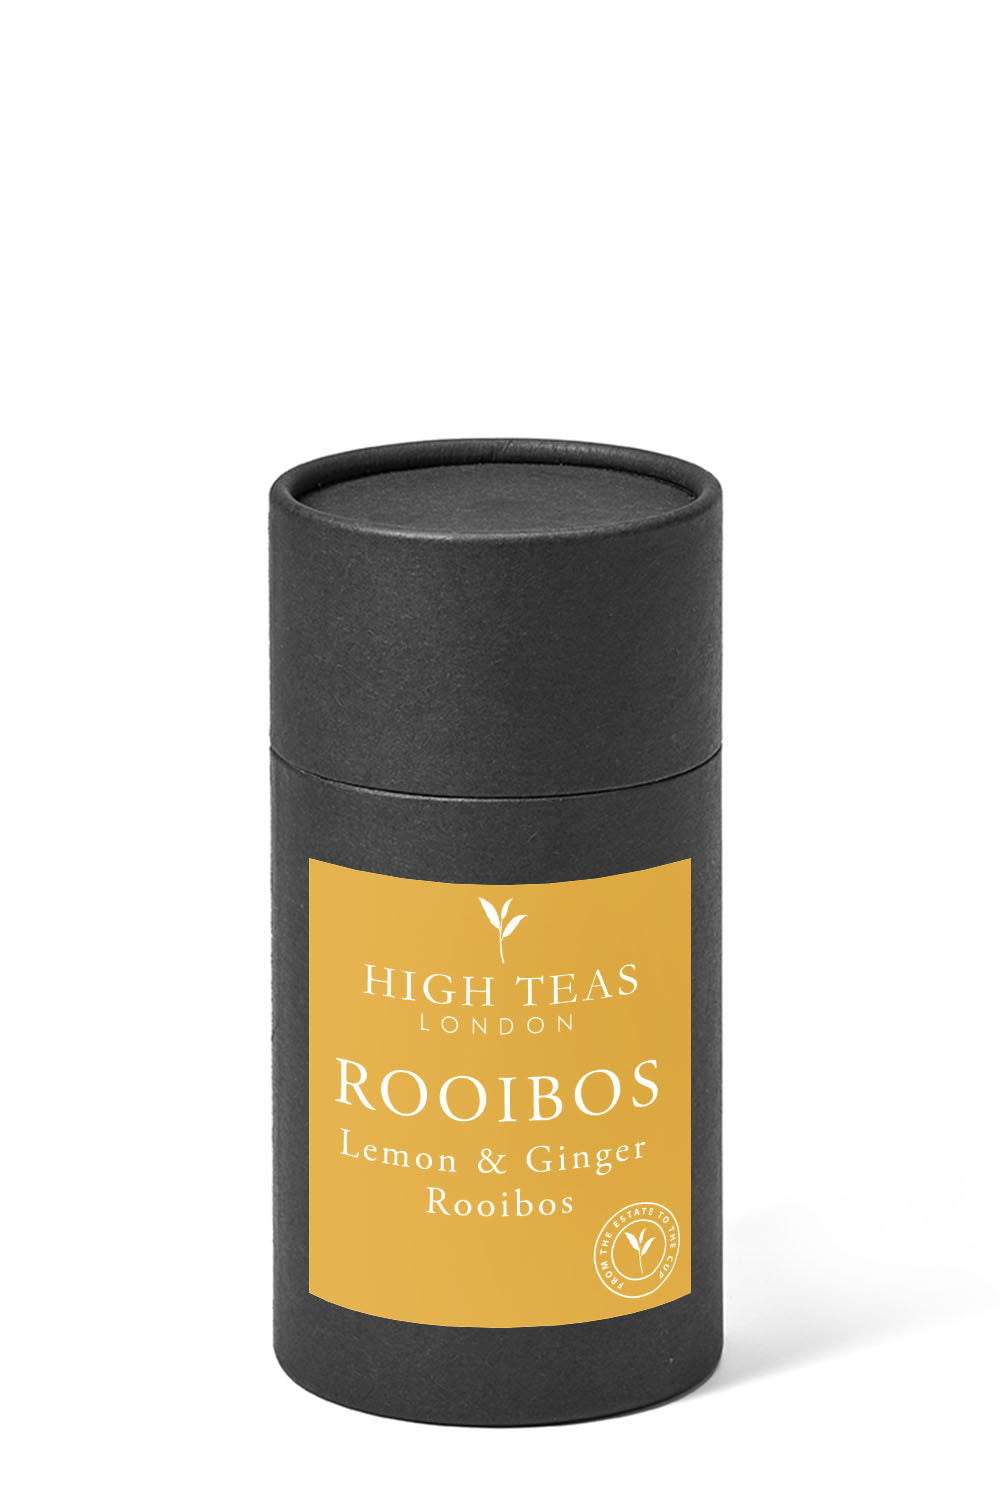 Lemon & Ginger Rooibos-60g gift-Loose Leaf Tea-High Teas